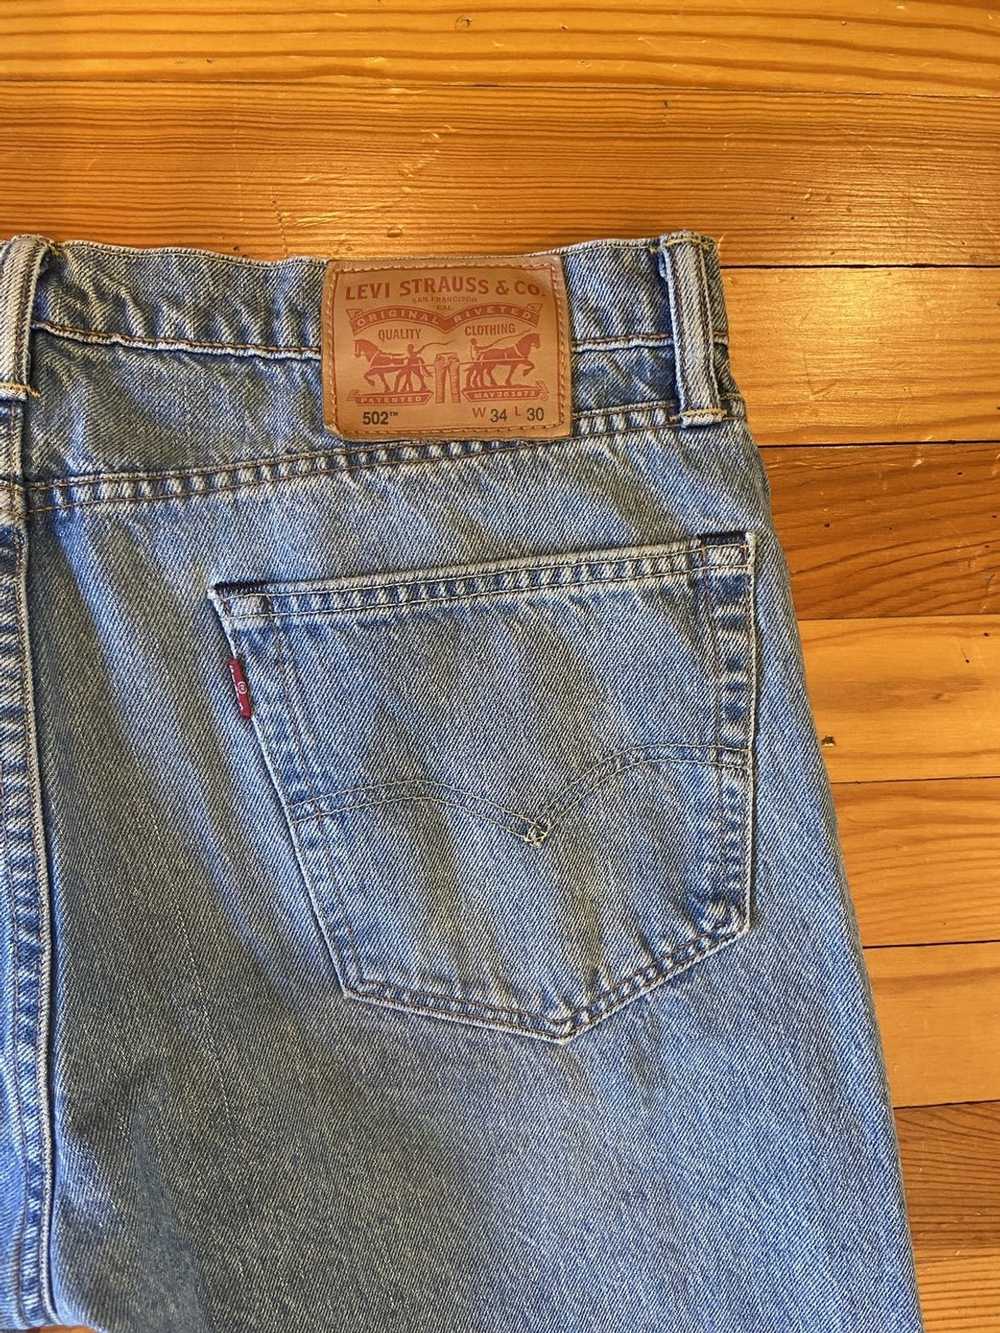 Levi's Levi's 502 Regular Taper Jeans - image 5